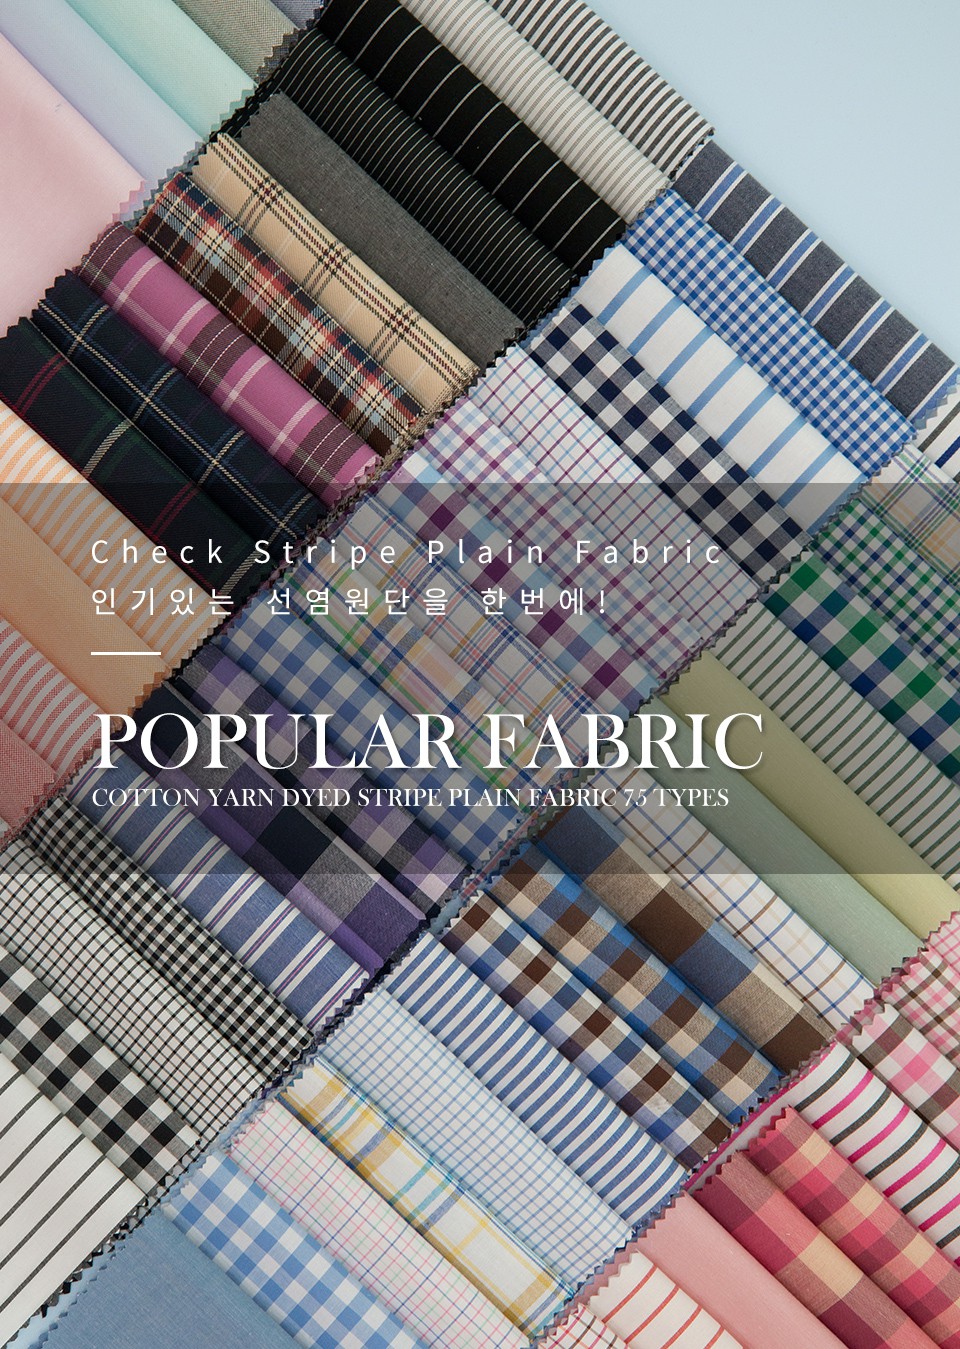 Check Stripe Plain Fabric